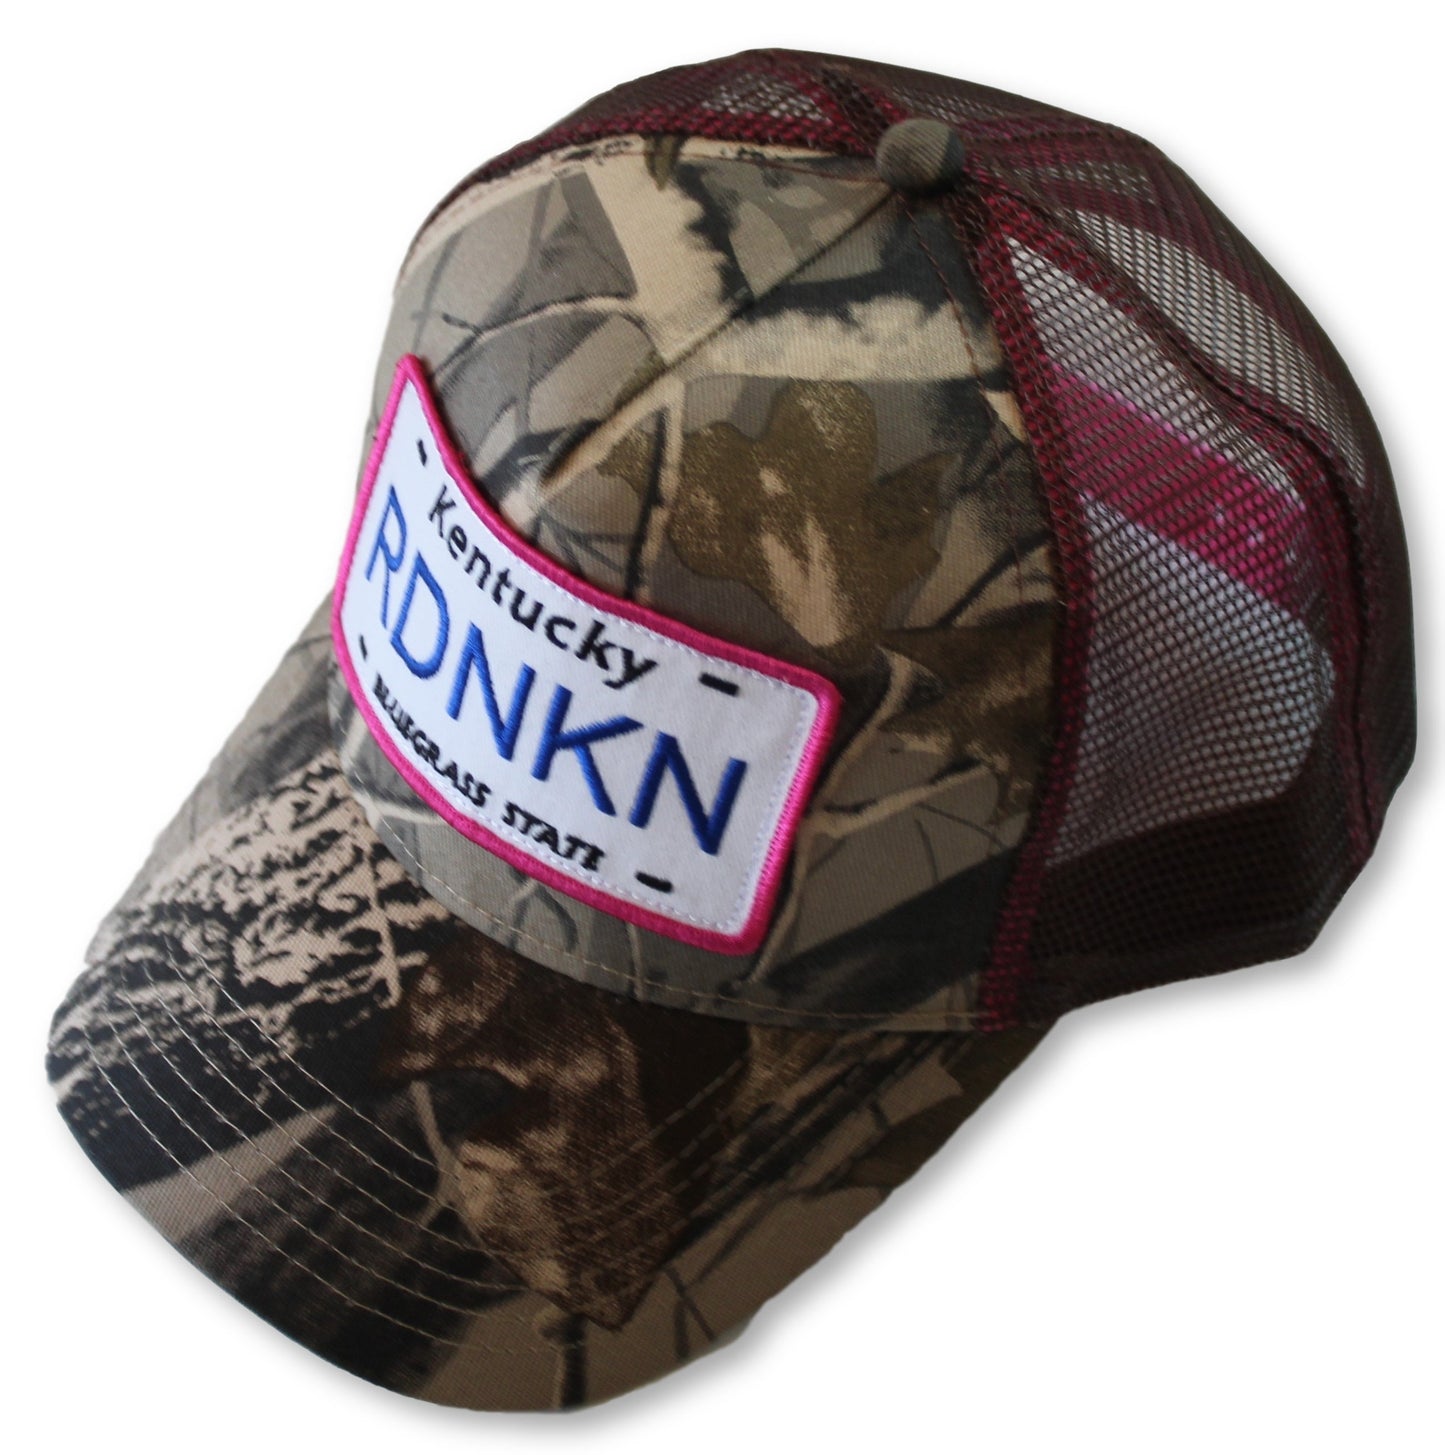 Kentucky RDNKN Mesh Snapback Trucker hat